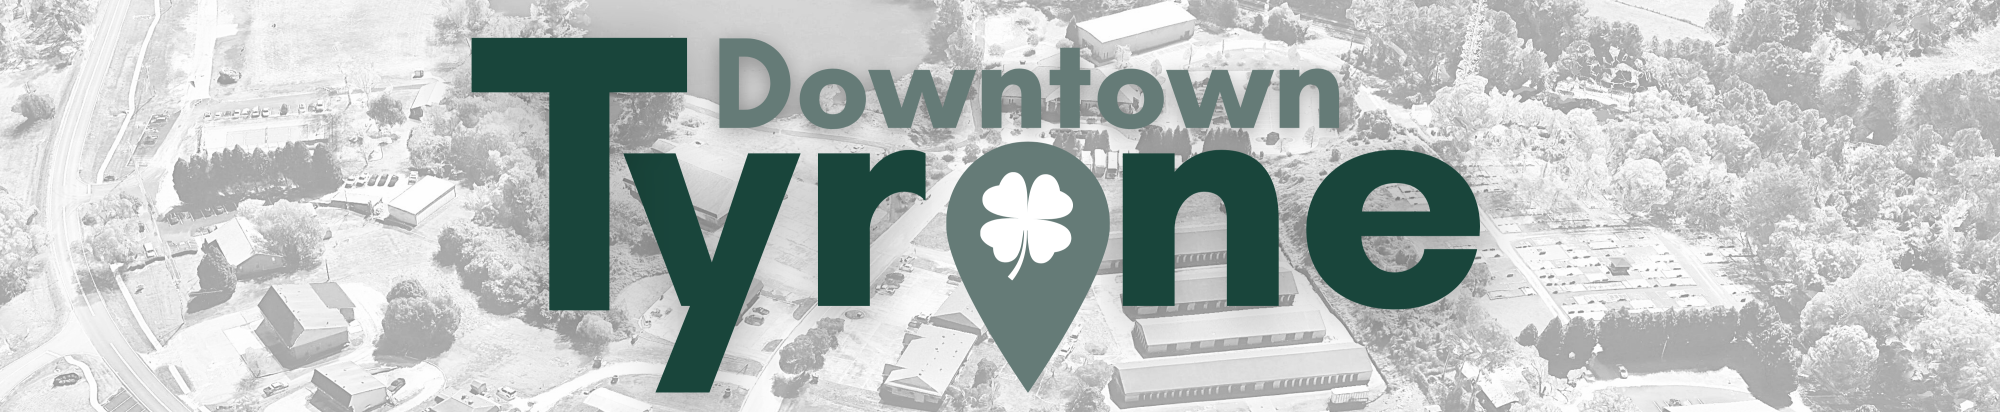 Downtown Tyrone